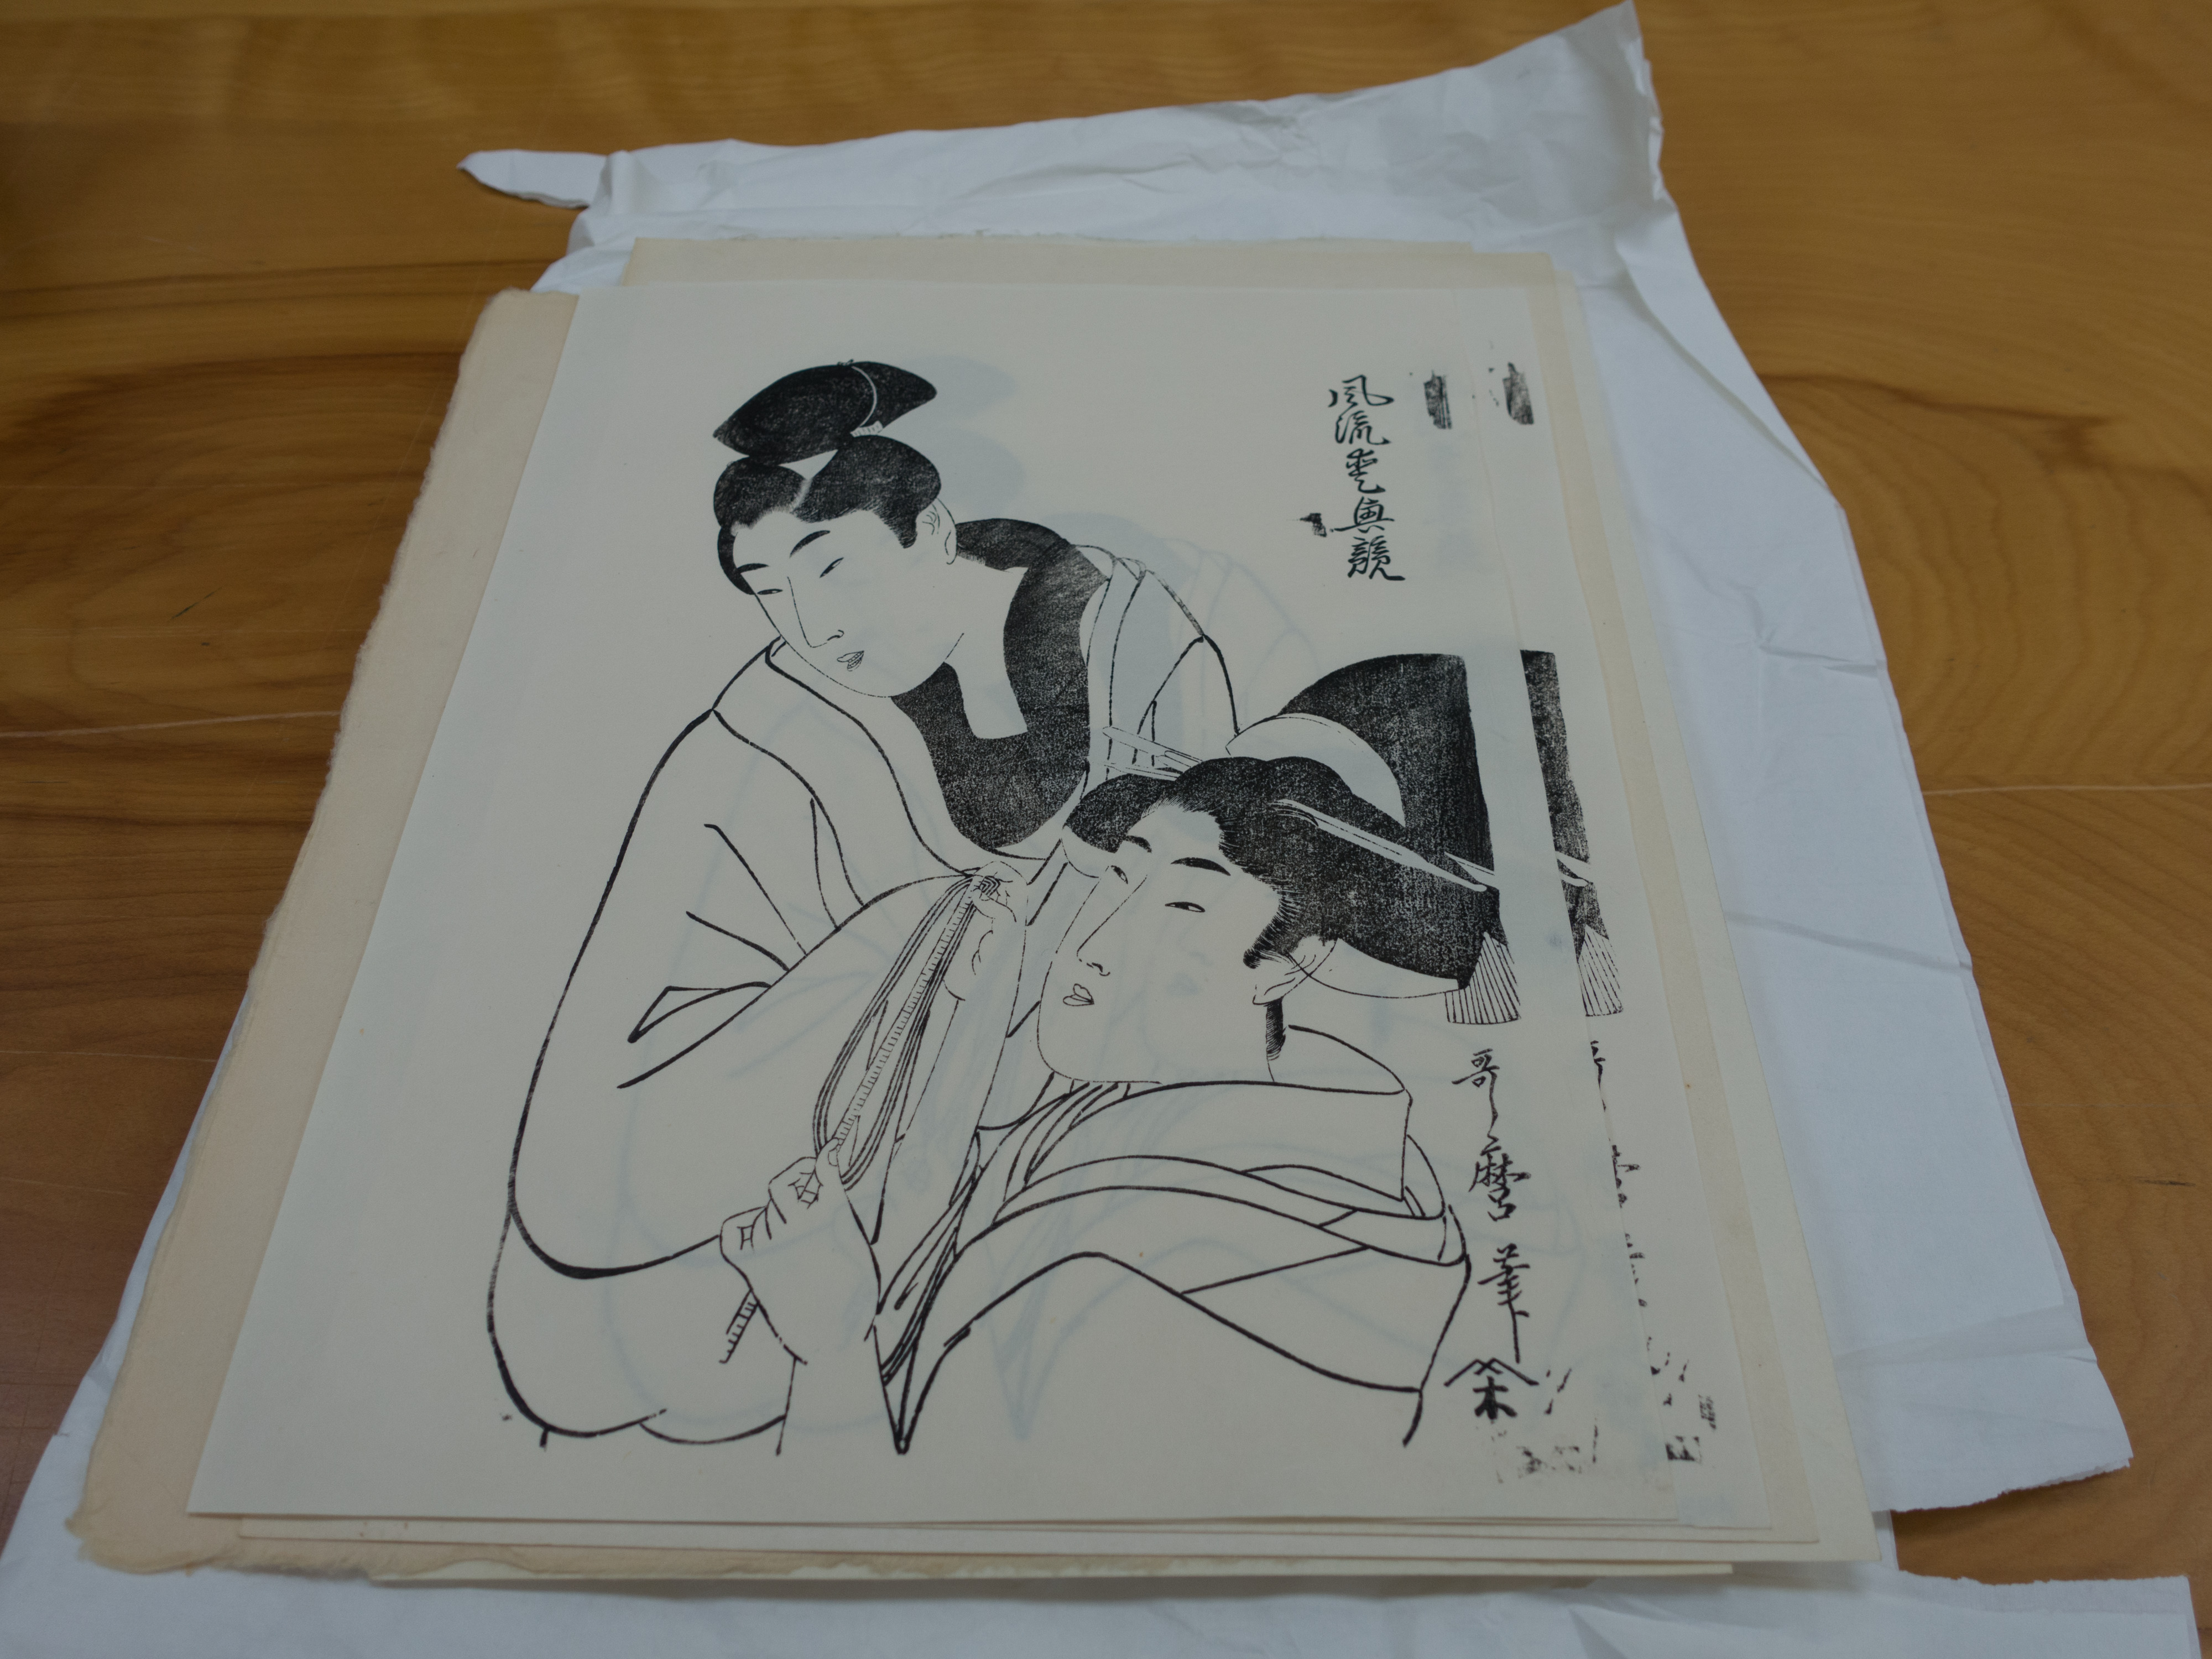 Printer S Woodblock For A Kitagawa Utamaro Print Recut Japan Edo Period 1615 1868 The